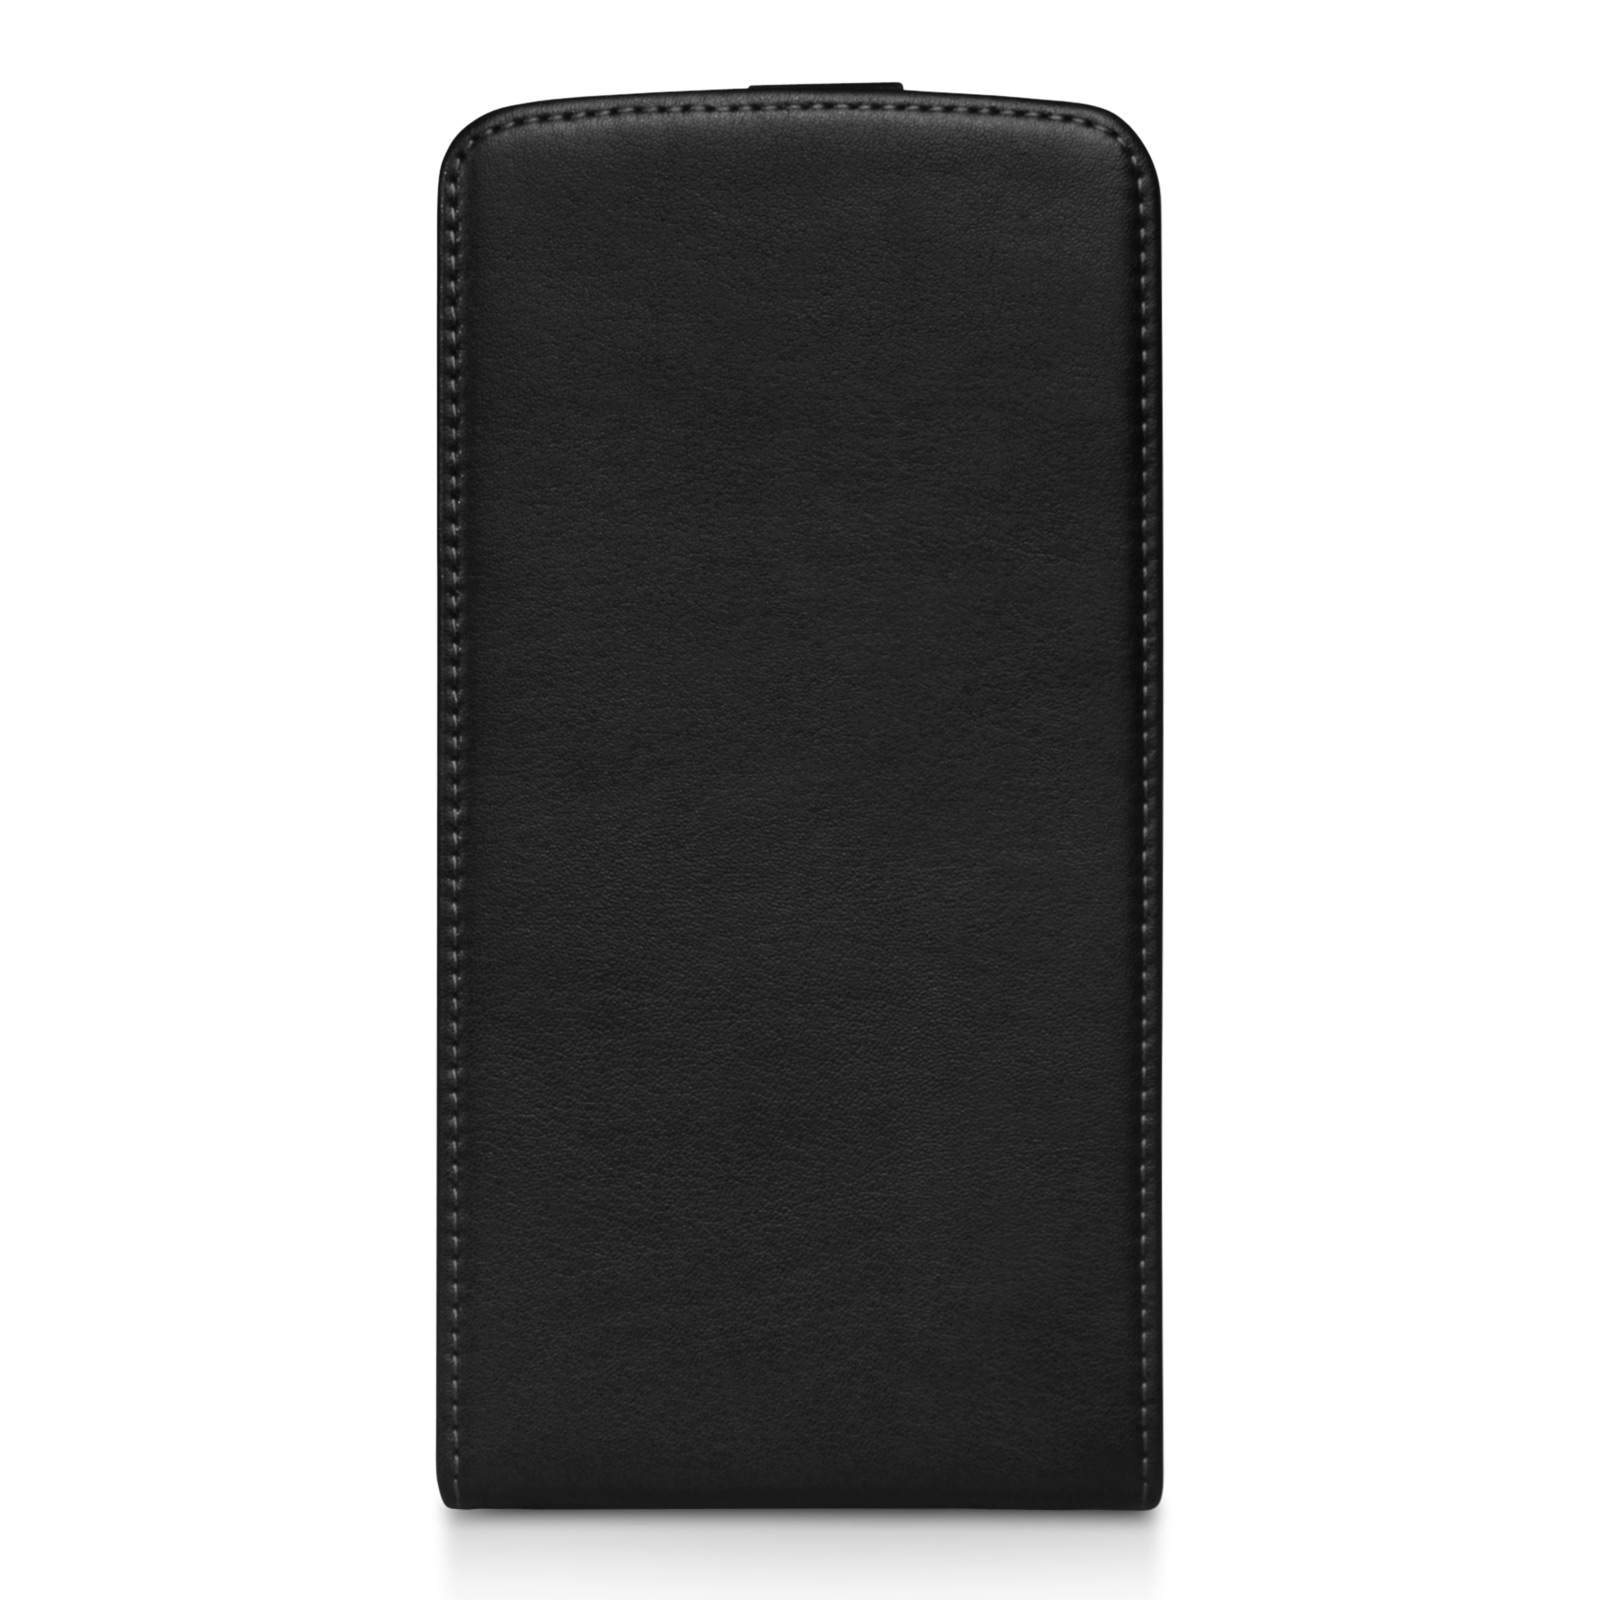 Caseflex LG G Pro 2 Real Leather Flip Case - Black